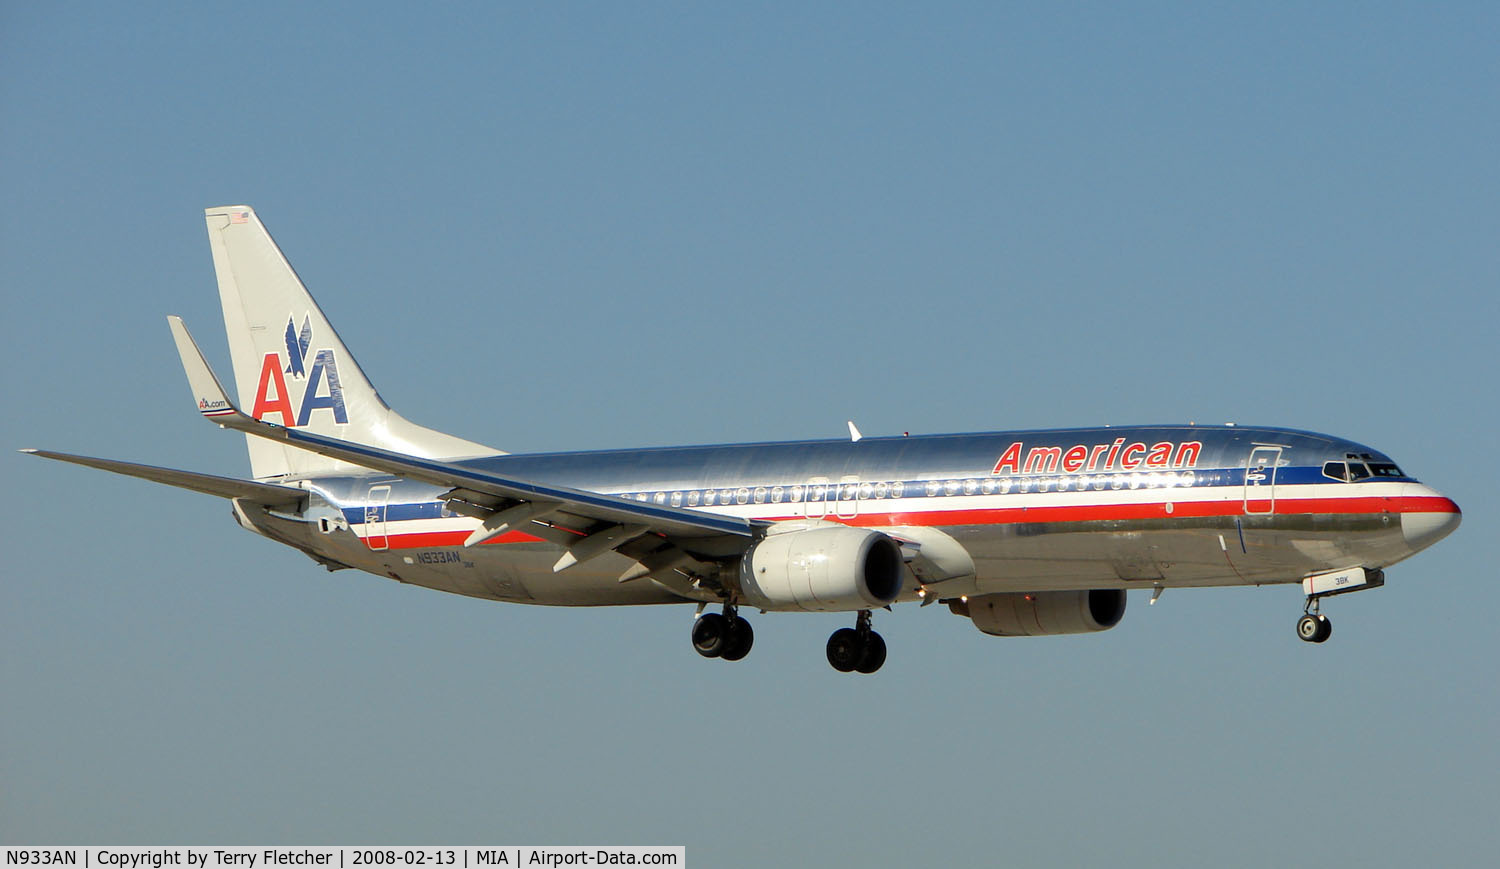 N933AN, 2000 Boeing 737-823 C/N 30080, American B737 lands at close quarters on the cross runway